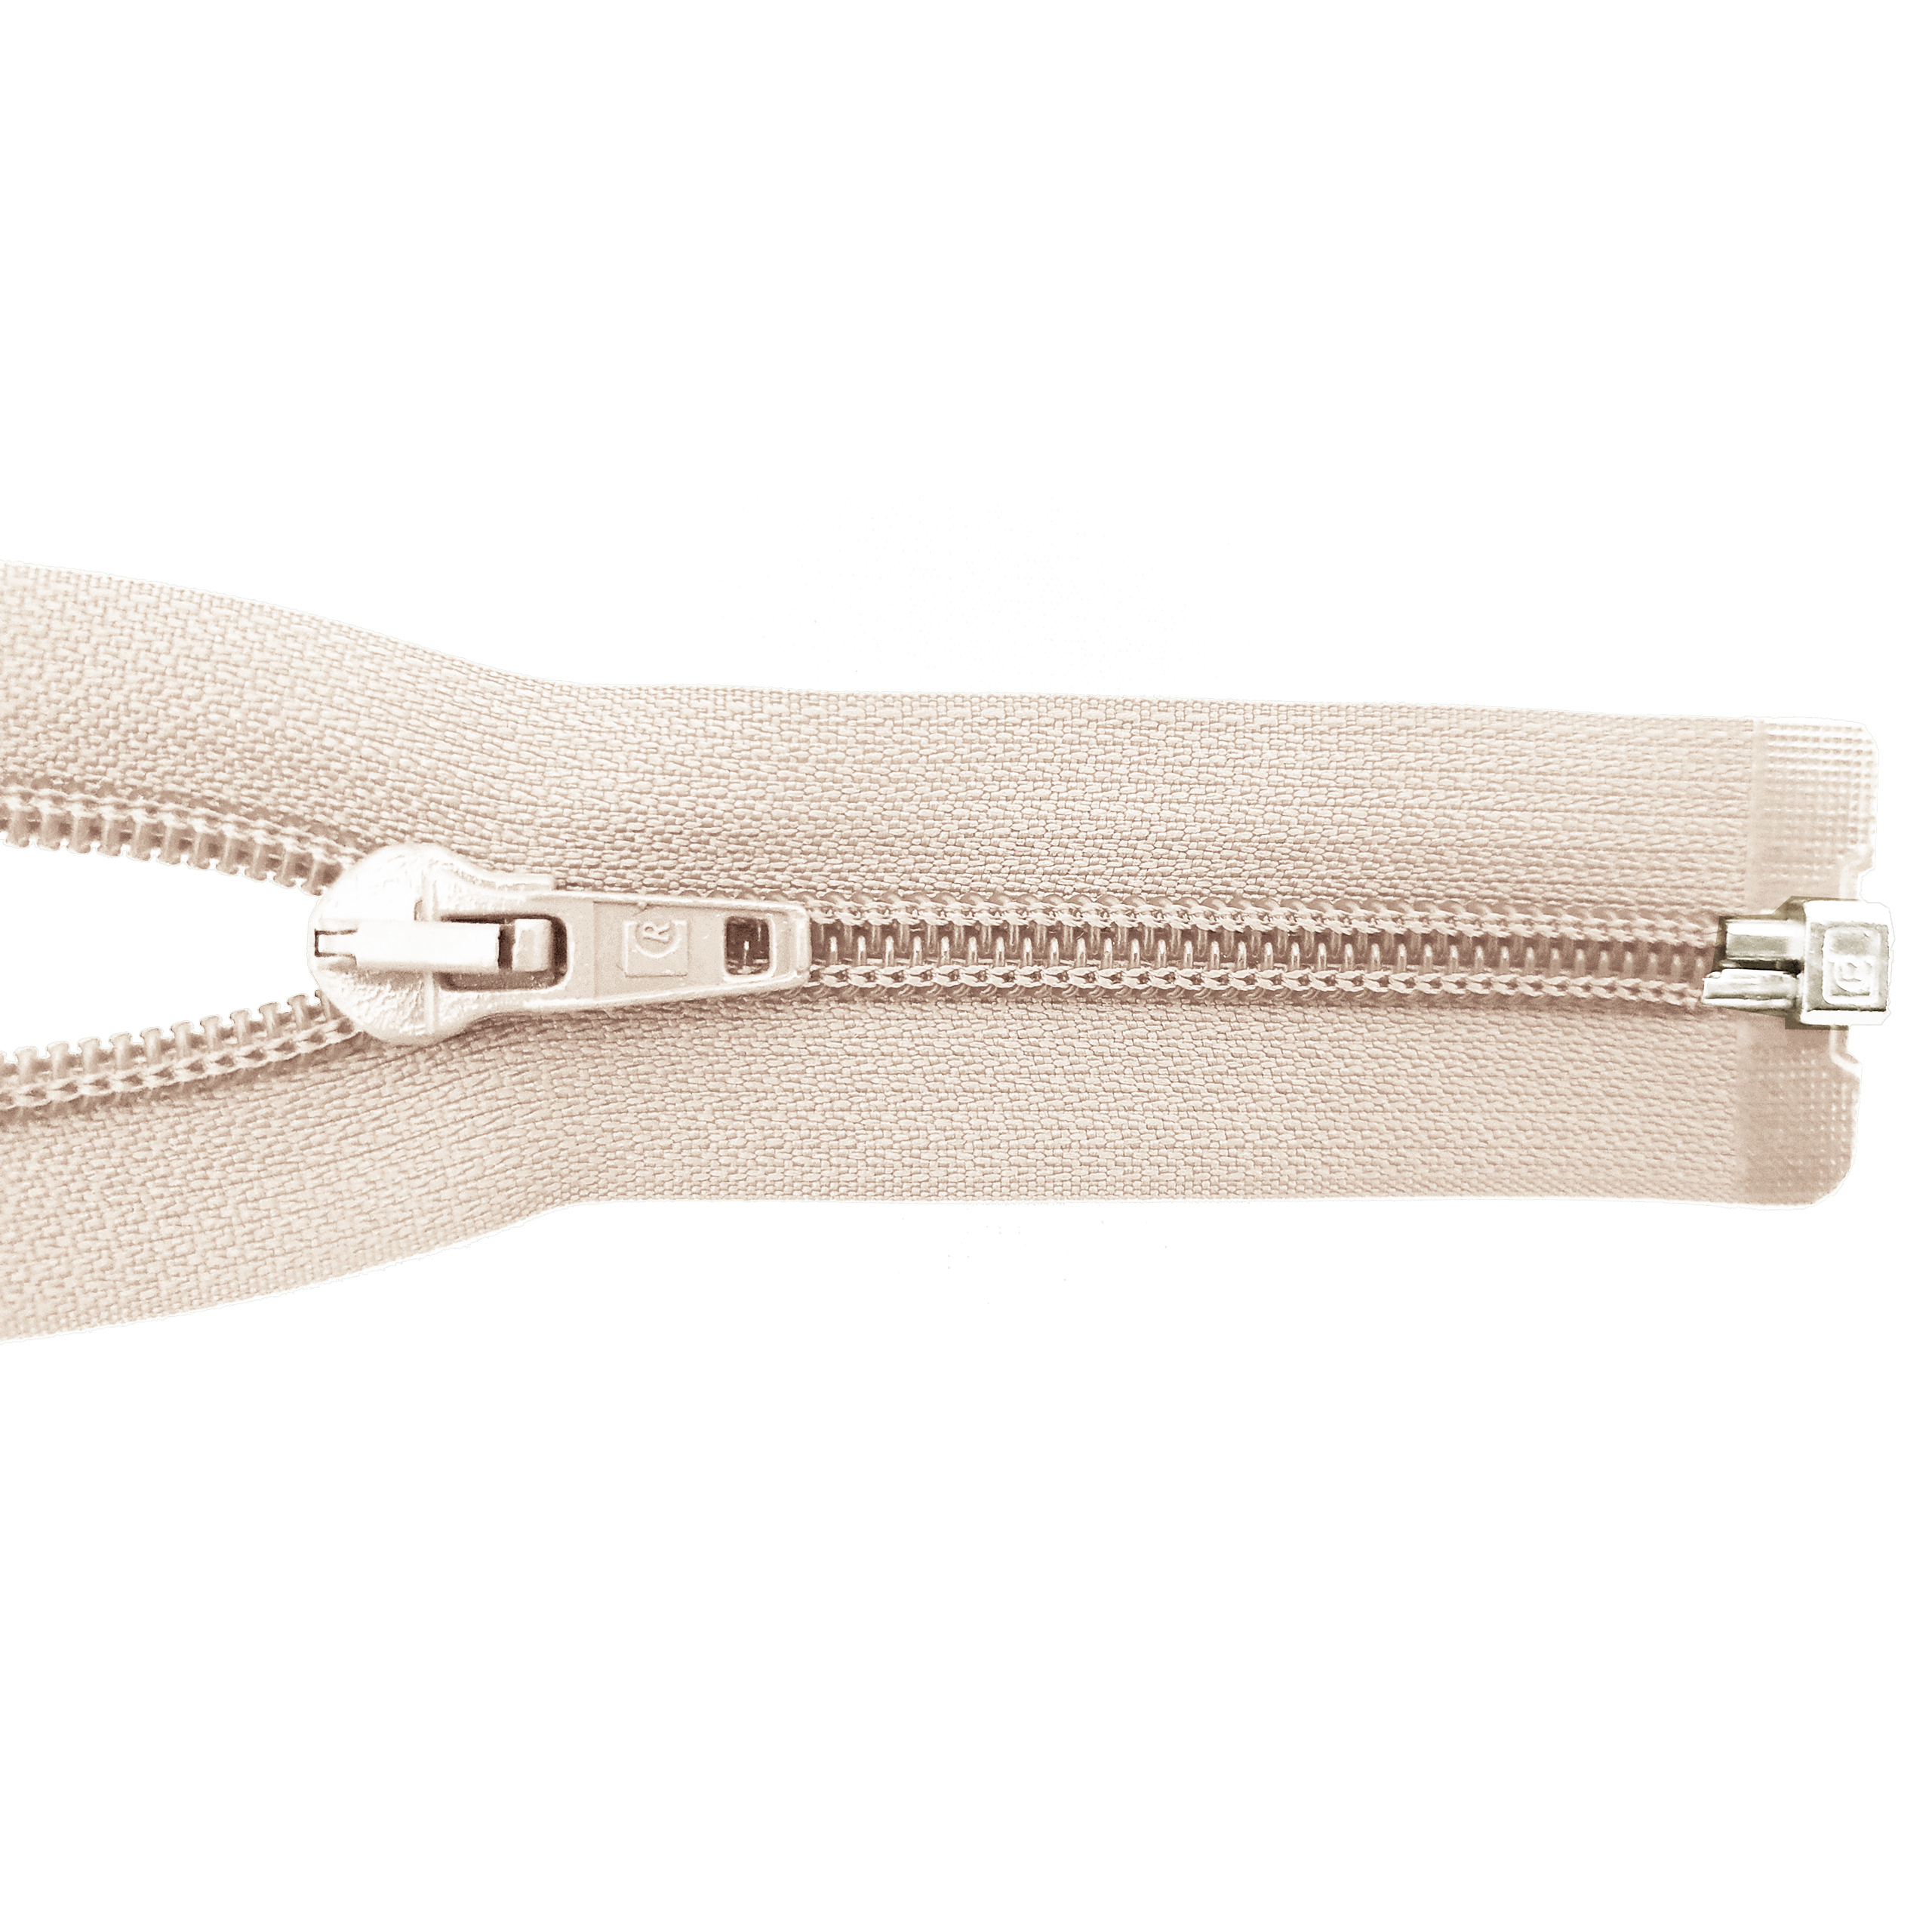 zipper 75cm,divisible, PES spiral, wide, light beige